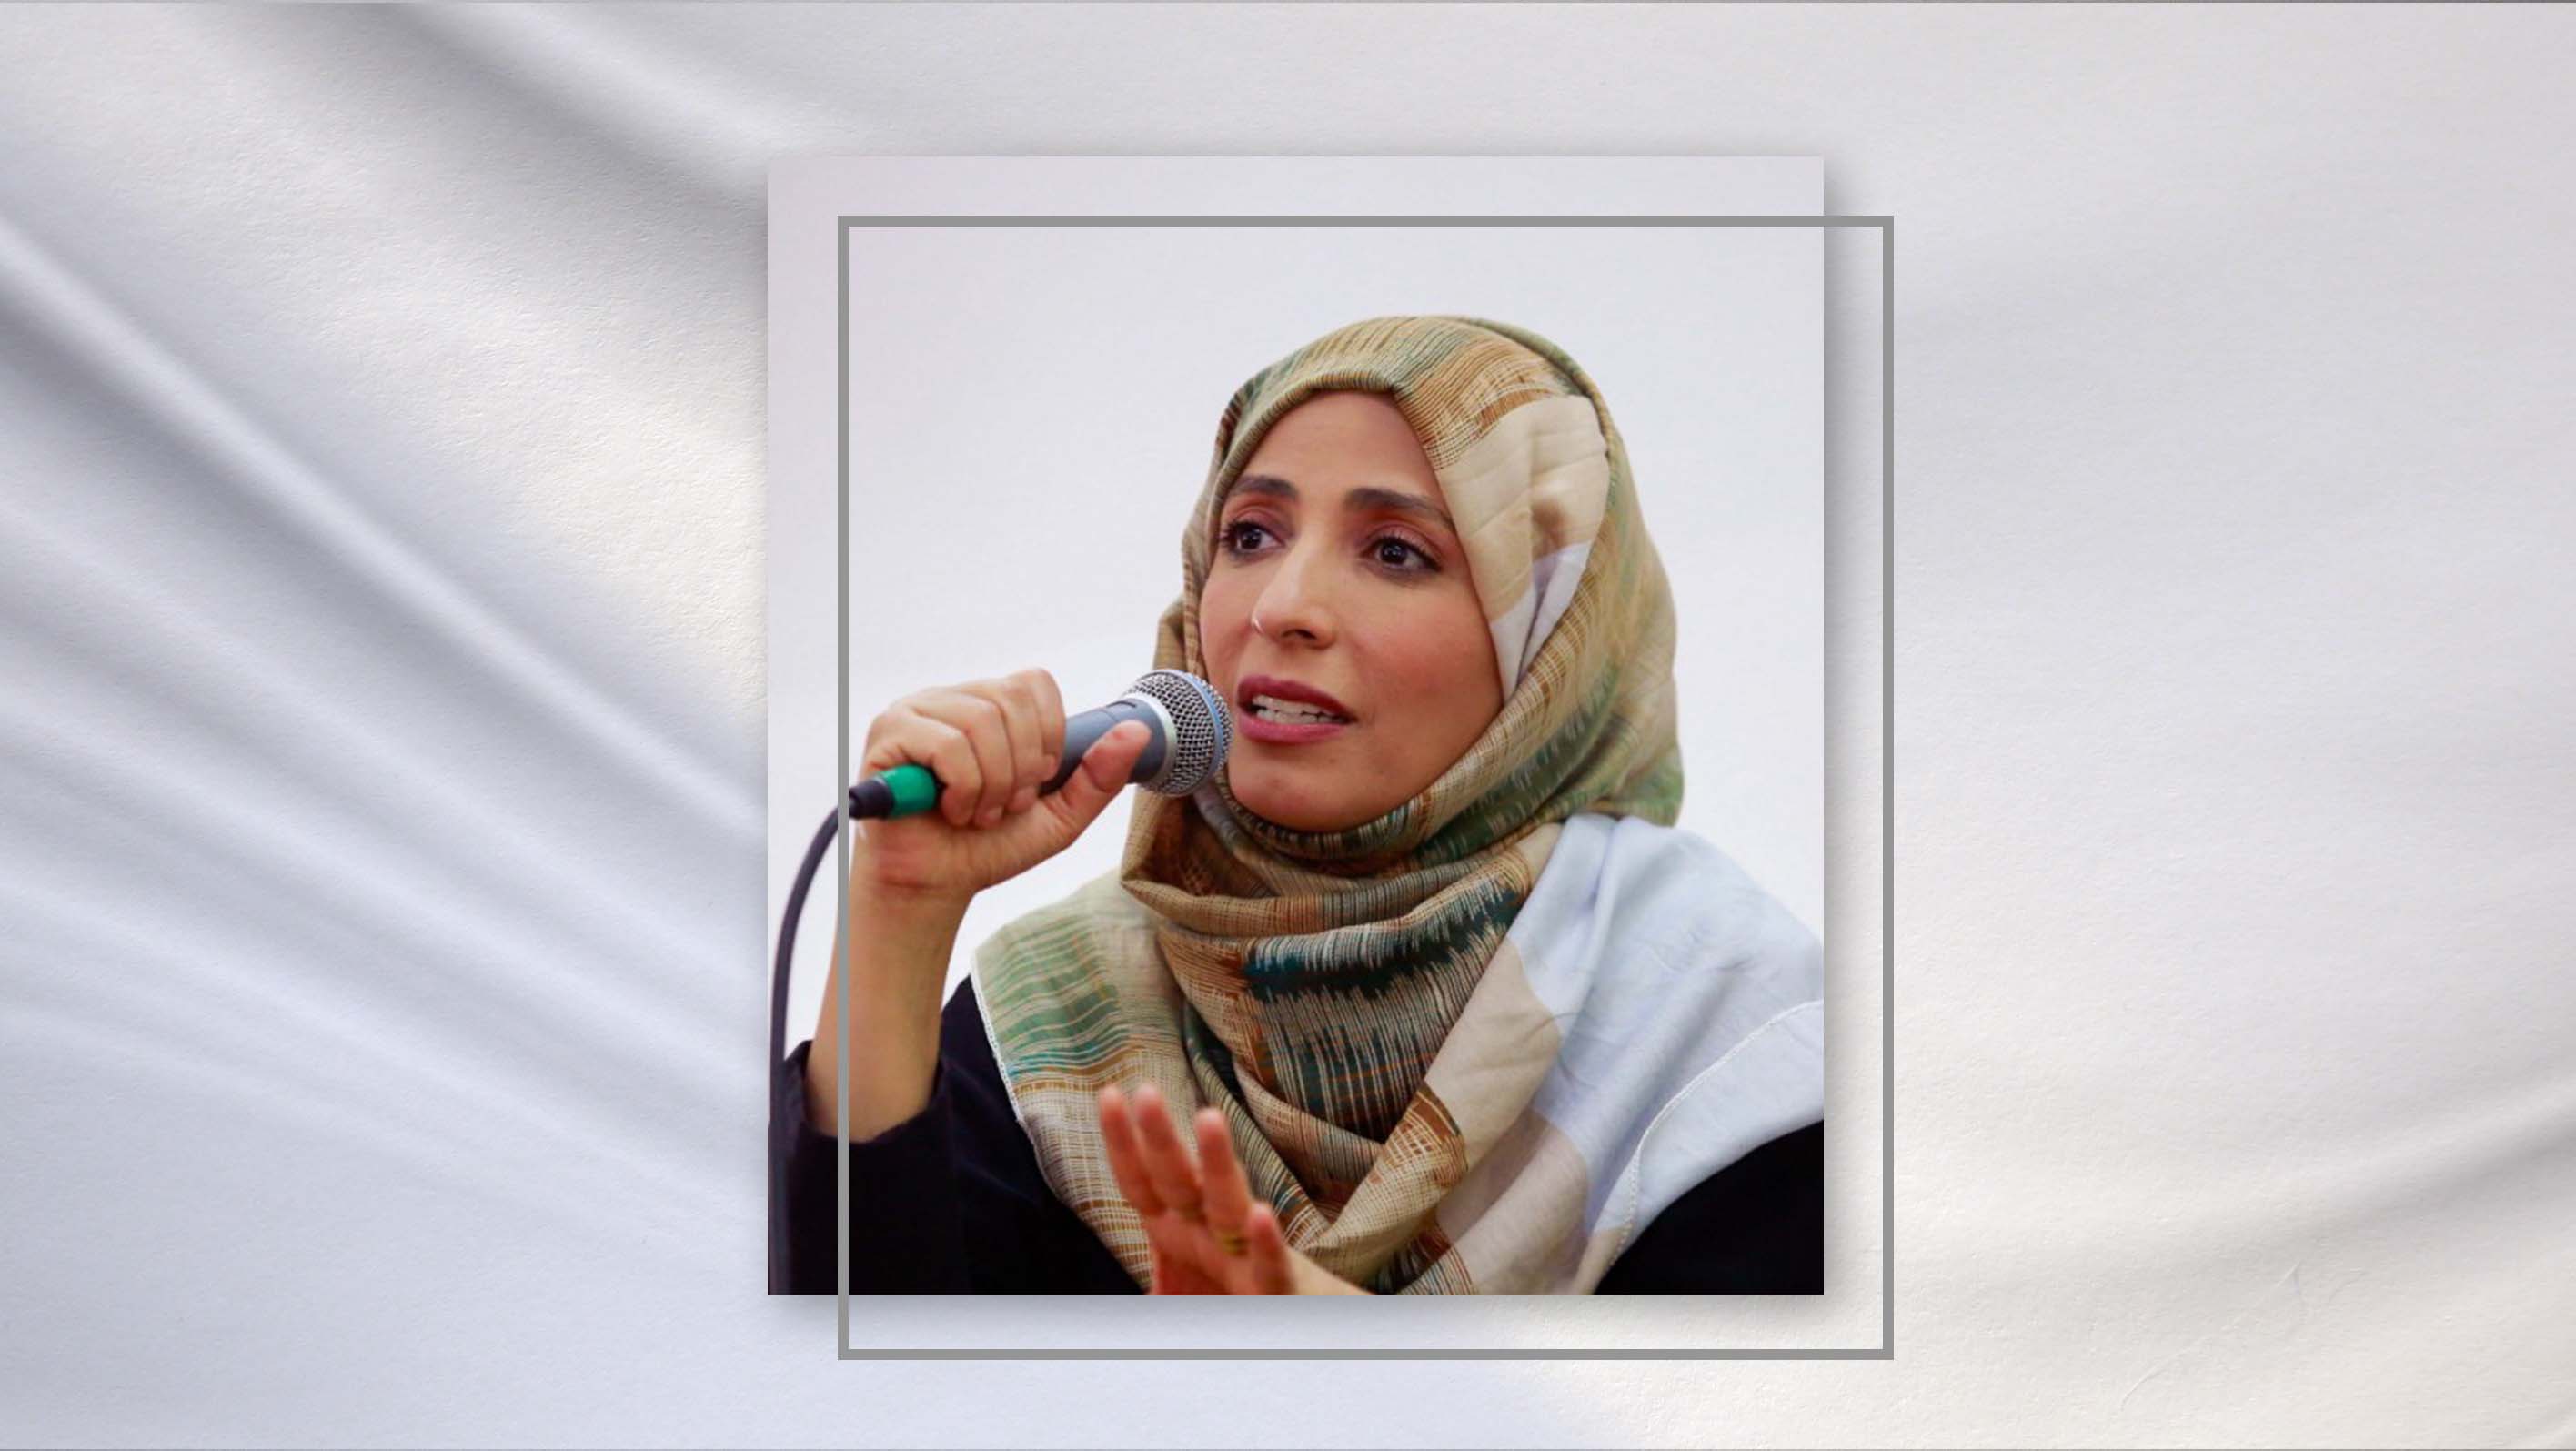 Tawakkol Karman delivered at Arab Peoples' Summit